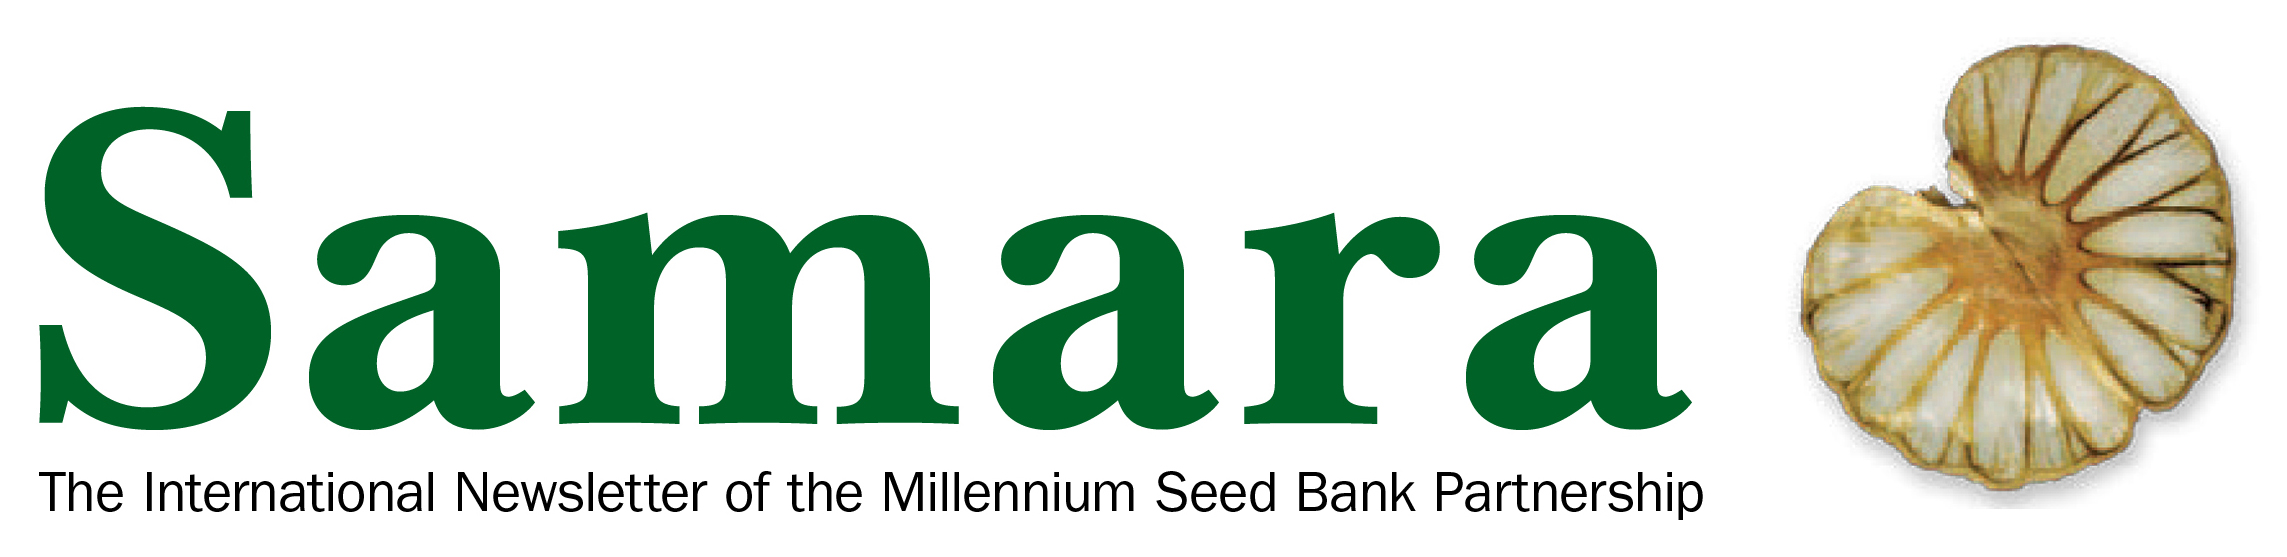 Samara: the international newsletter of the Millennium Seed Bank Partnership